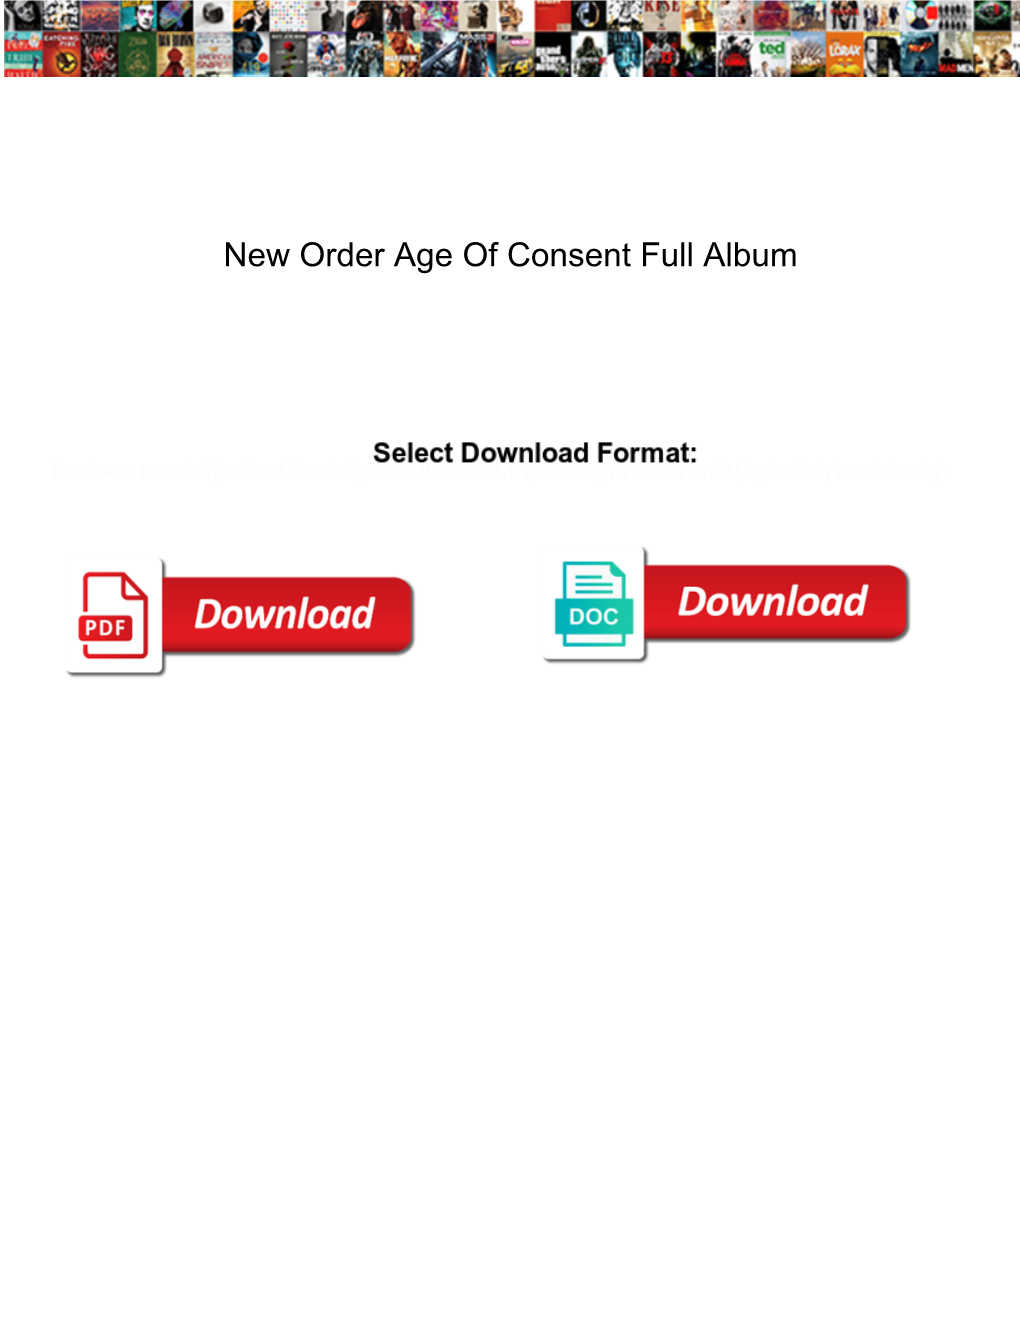 New Order Age of Consent Full Album